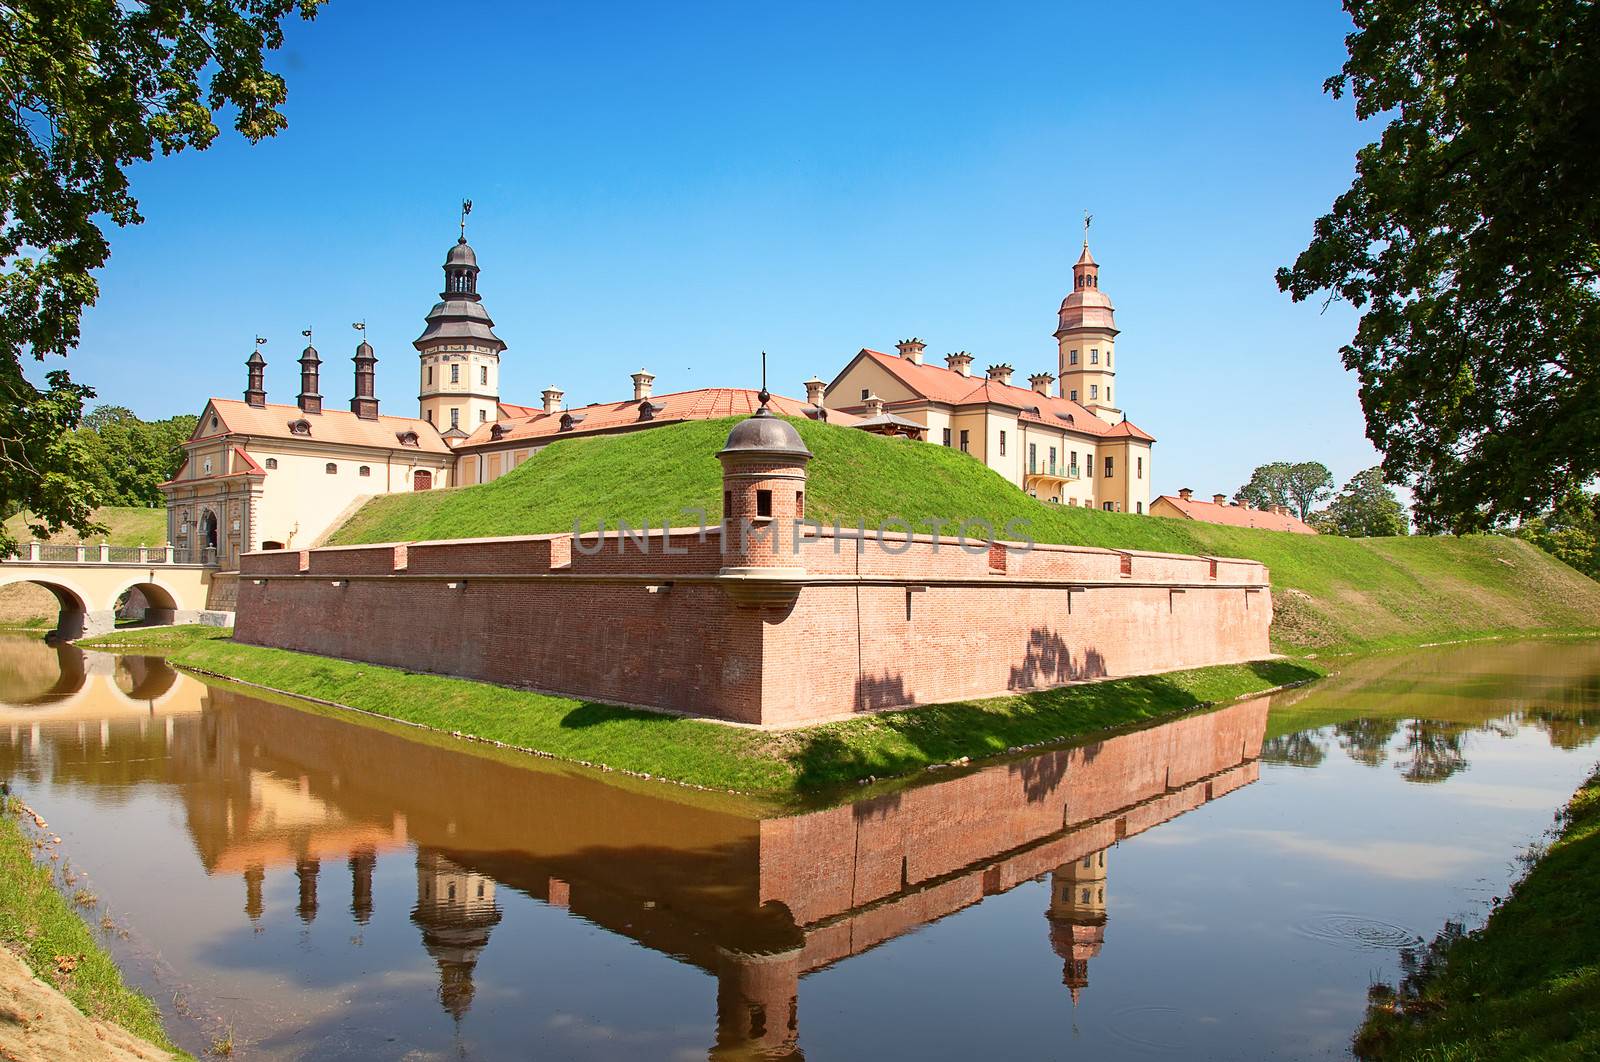 Medieval castle in Nesvizh, Republic of Belarus.